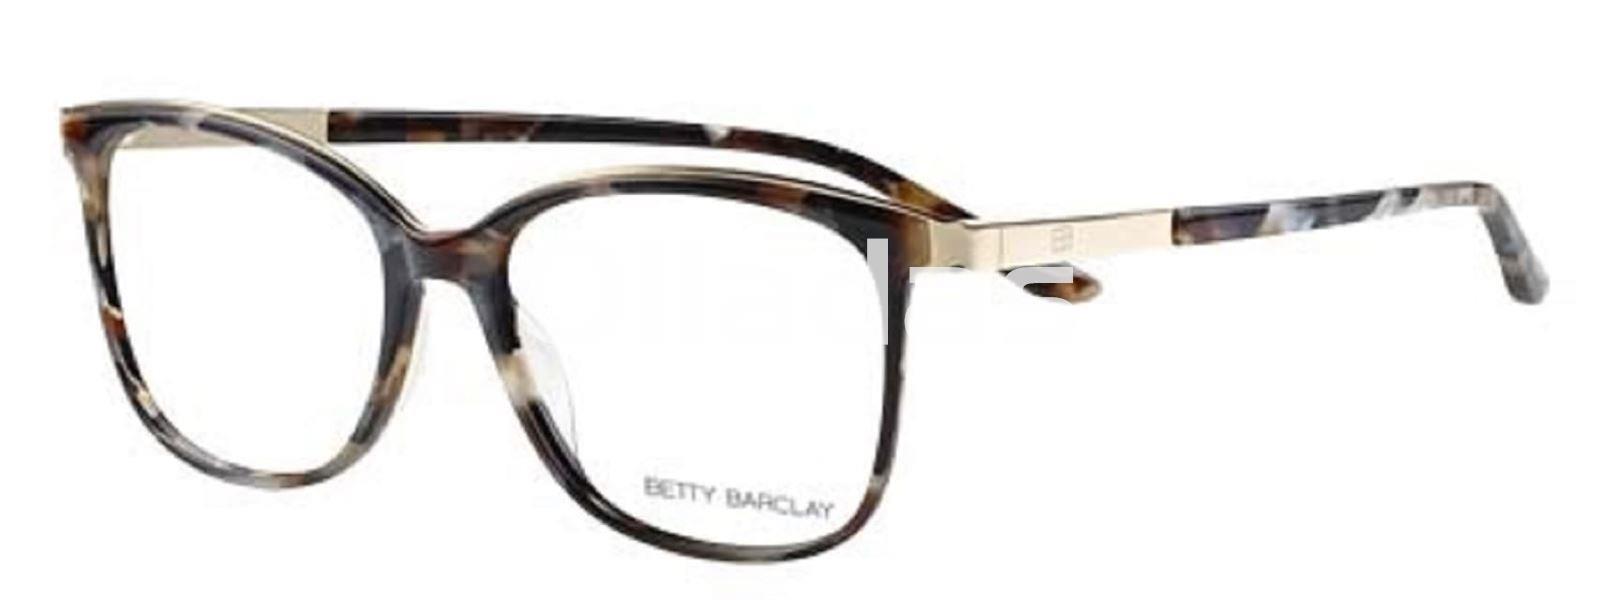 Betty Barclay 51116. - Imagen 1